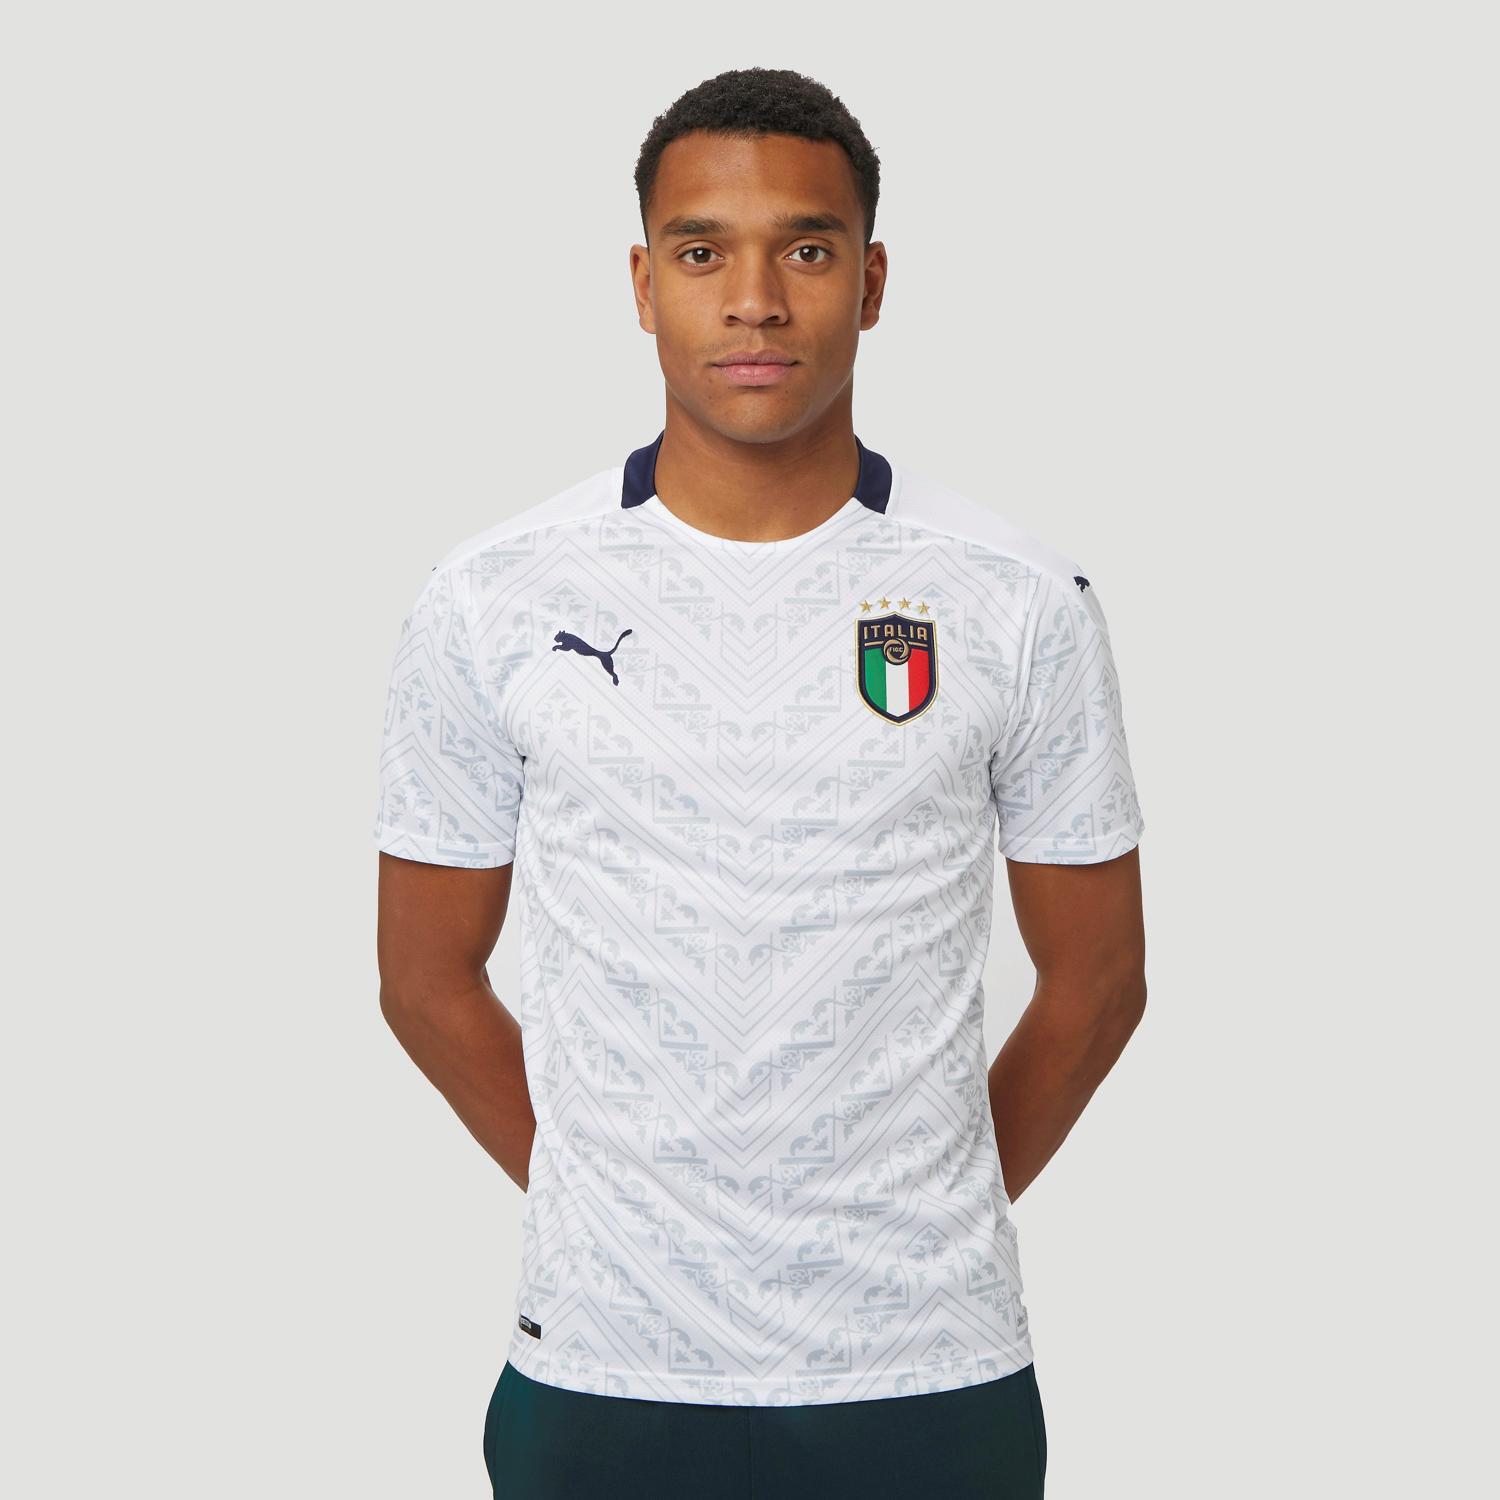 Camisola Italia Branco - Camisola Futebol Homem tamanho L